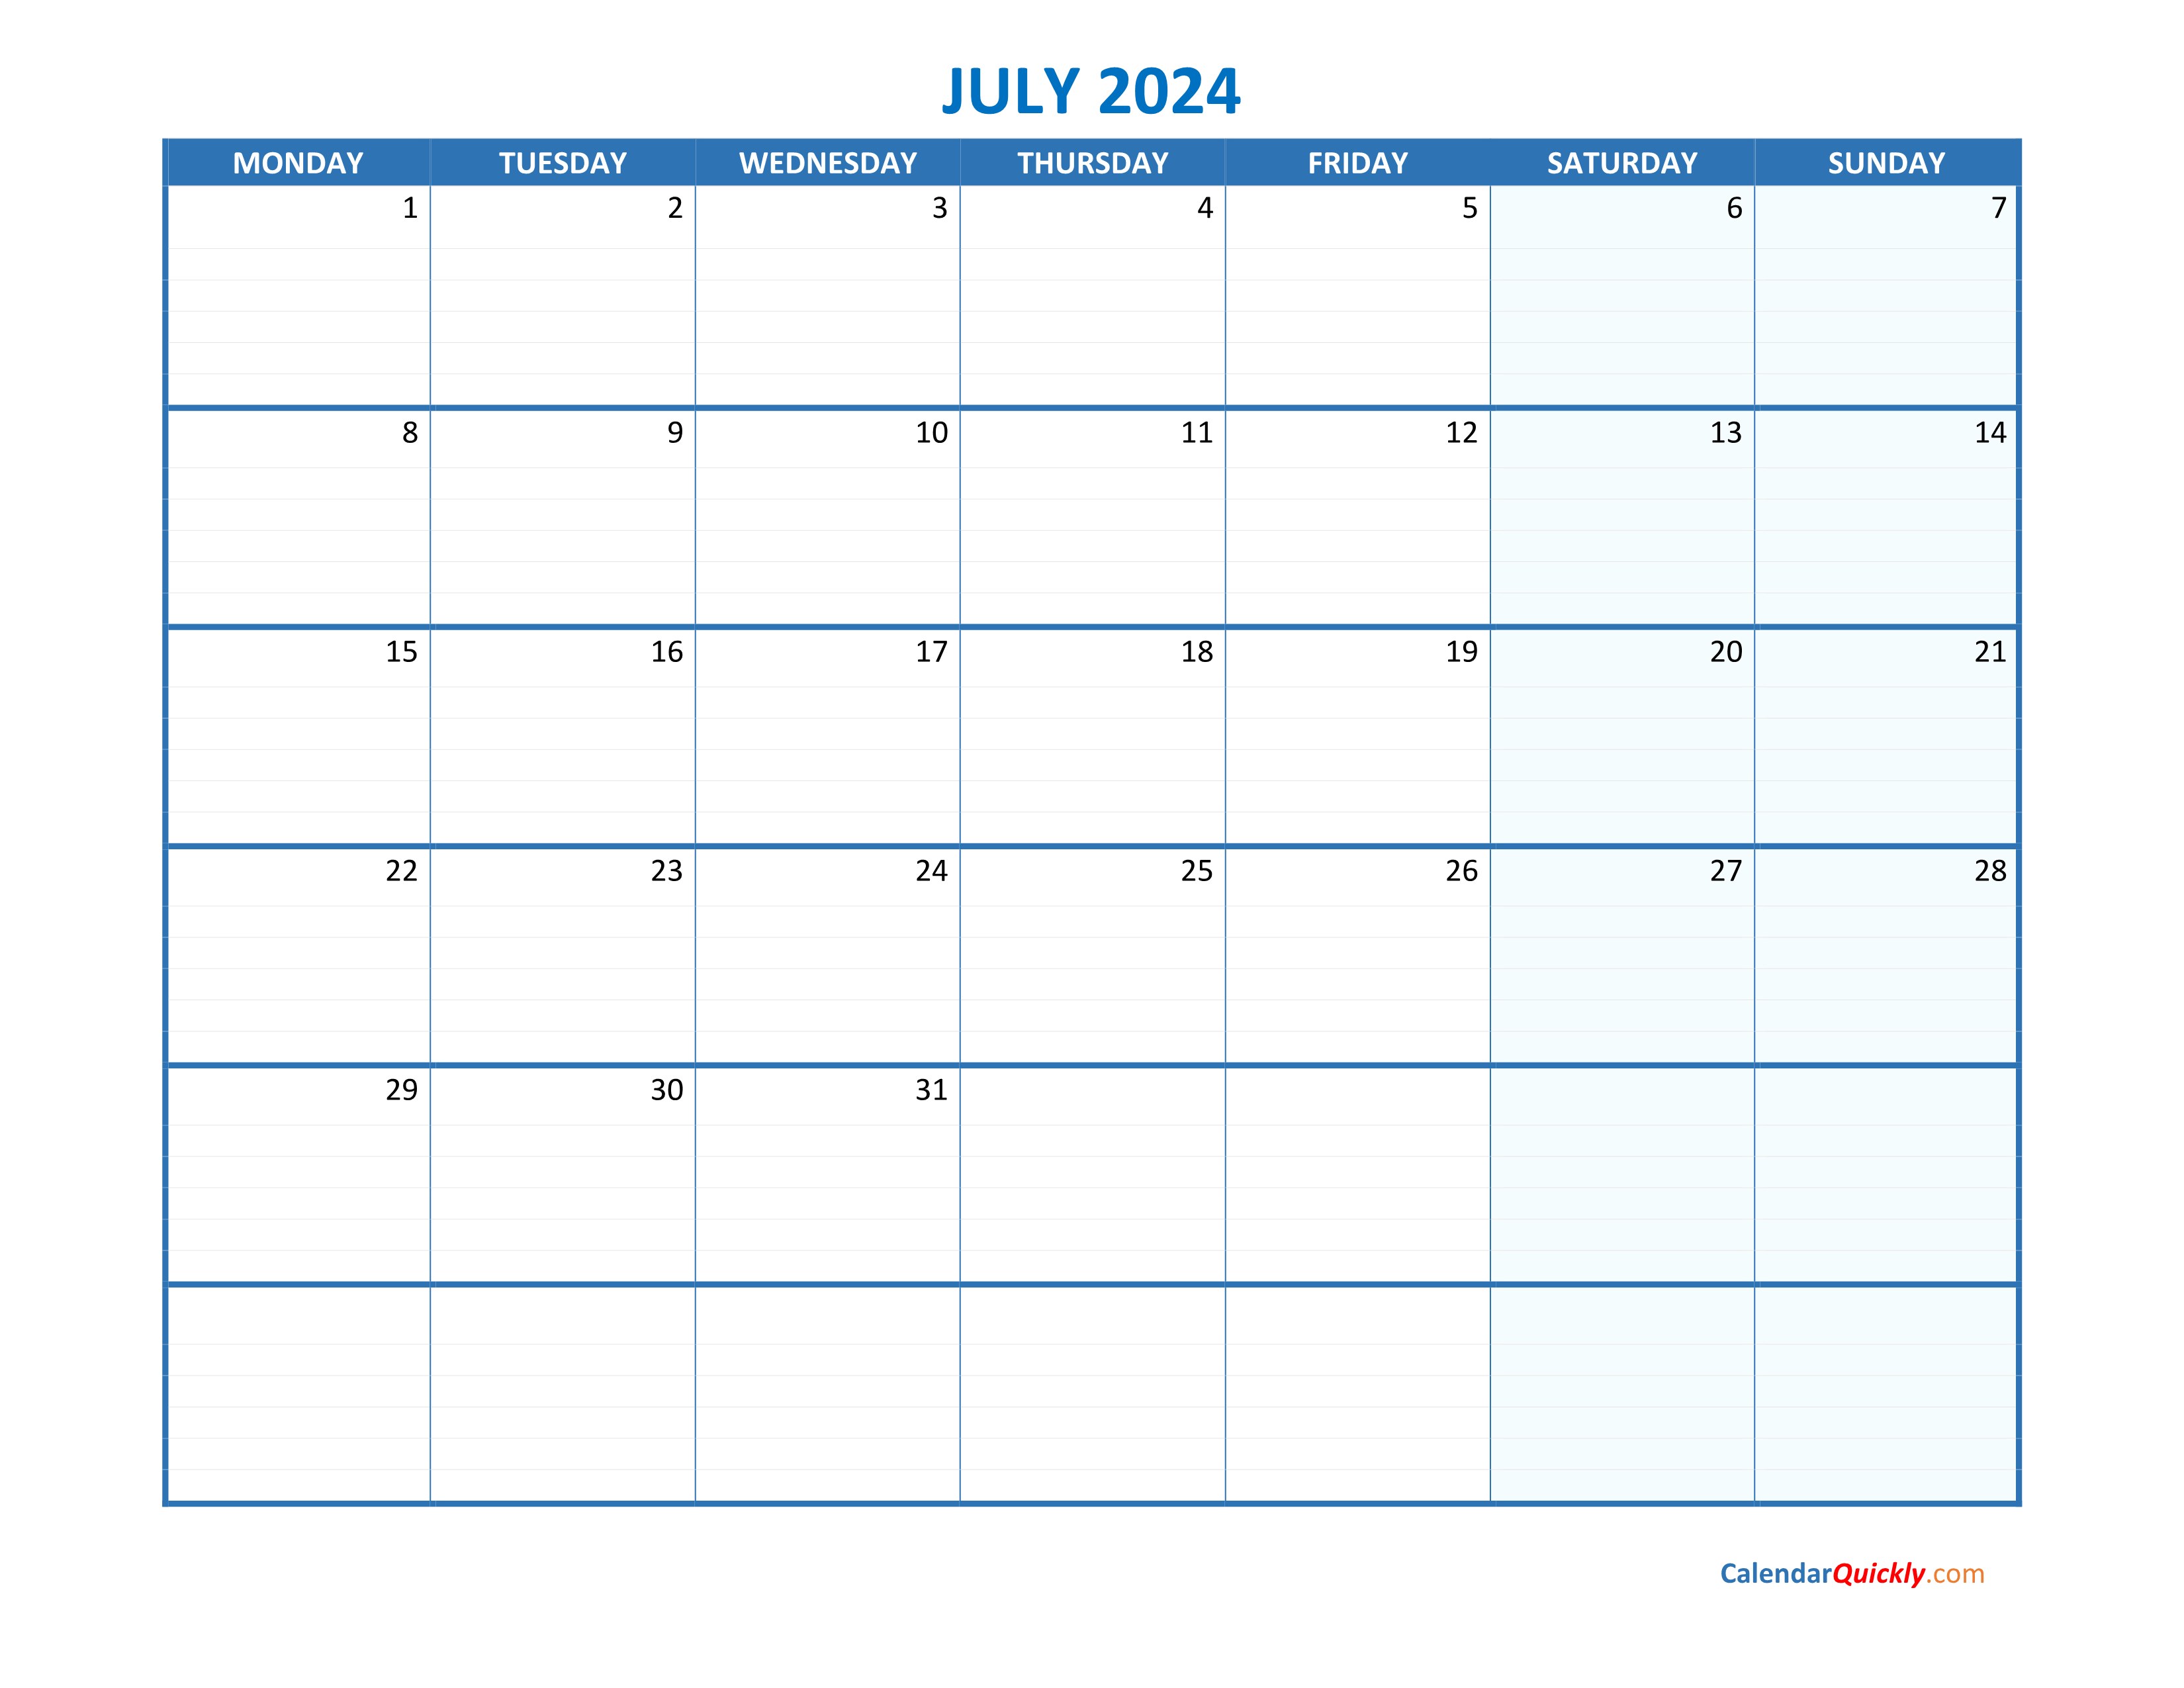 July Monday 2024 Blank Calendar Calendar Quickly